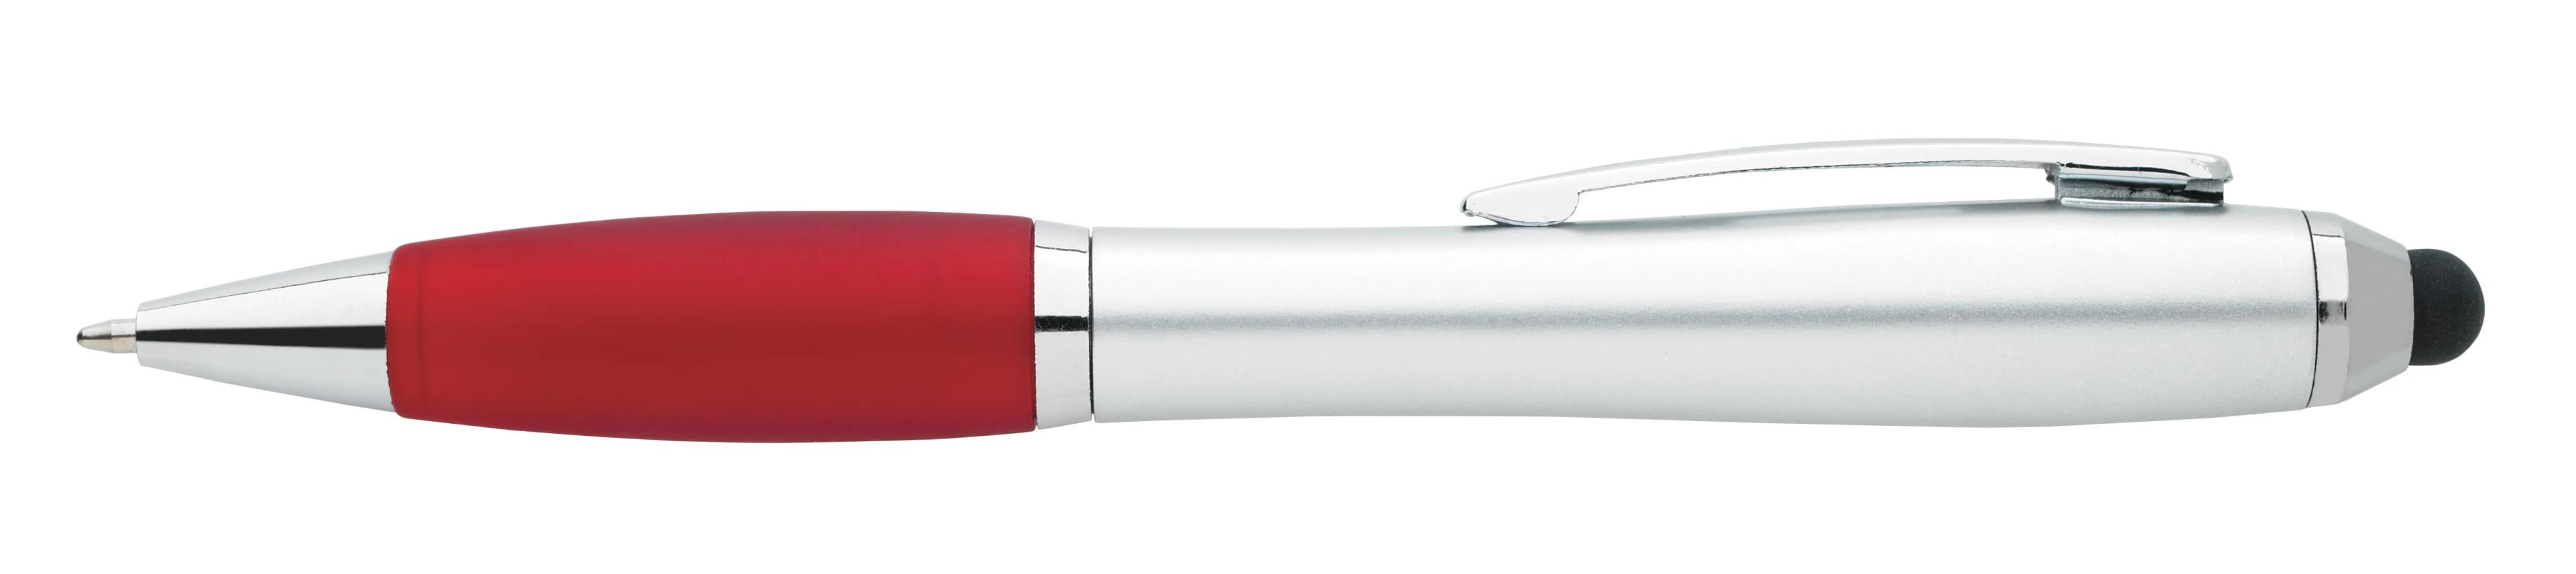 Ion Silver Stylus Pen 4 of 17